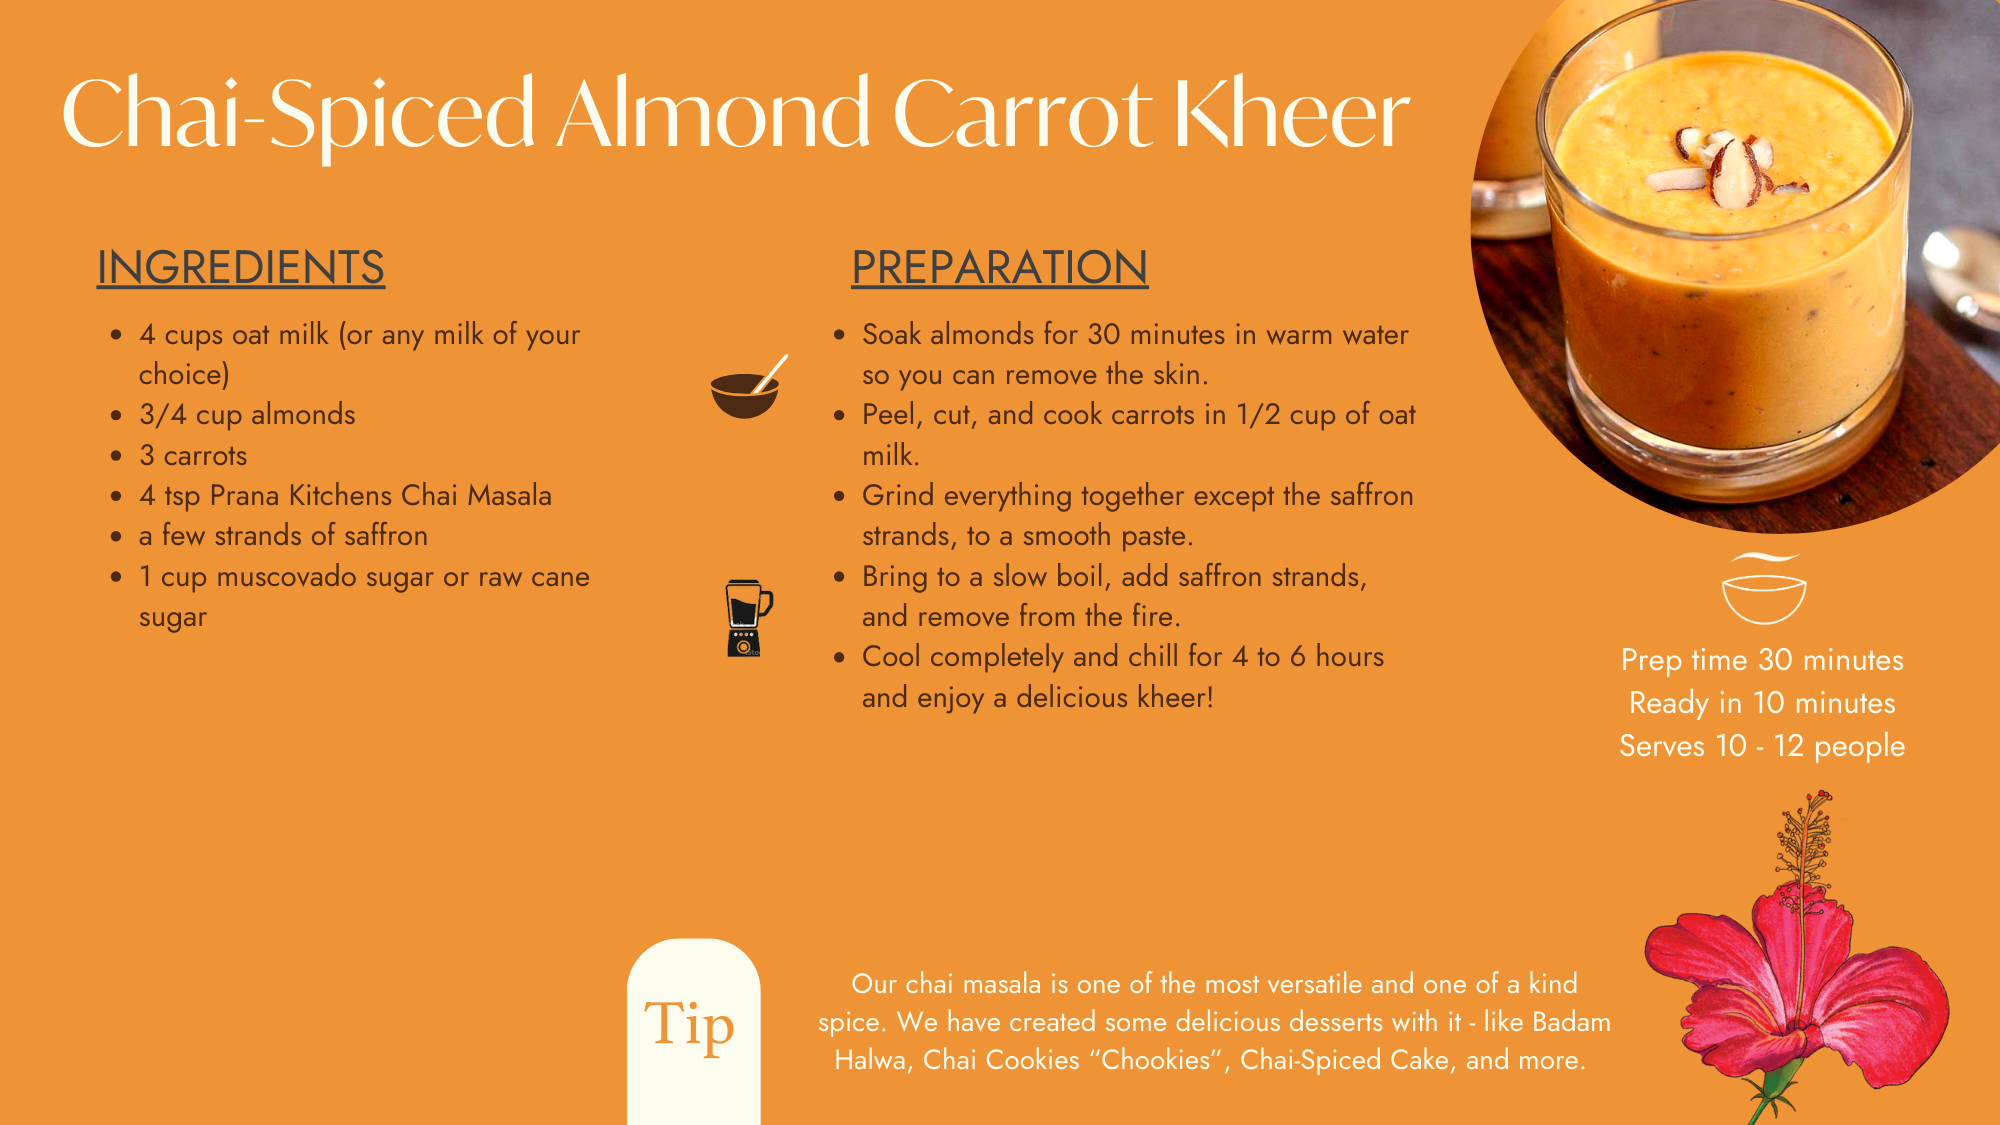 Chai-Spiced Almond Carrot Kheer